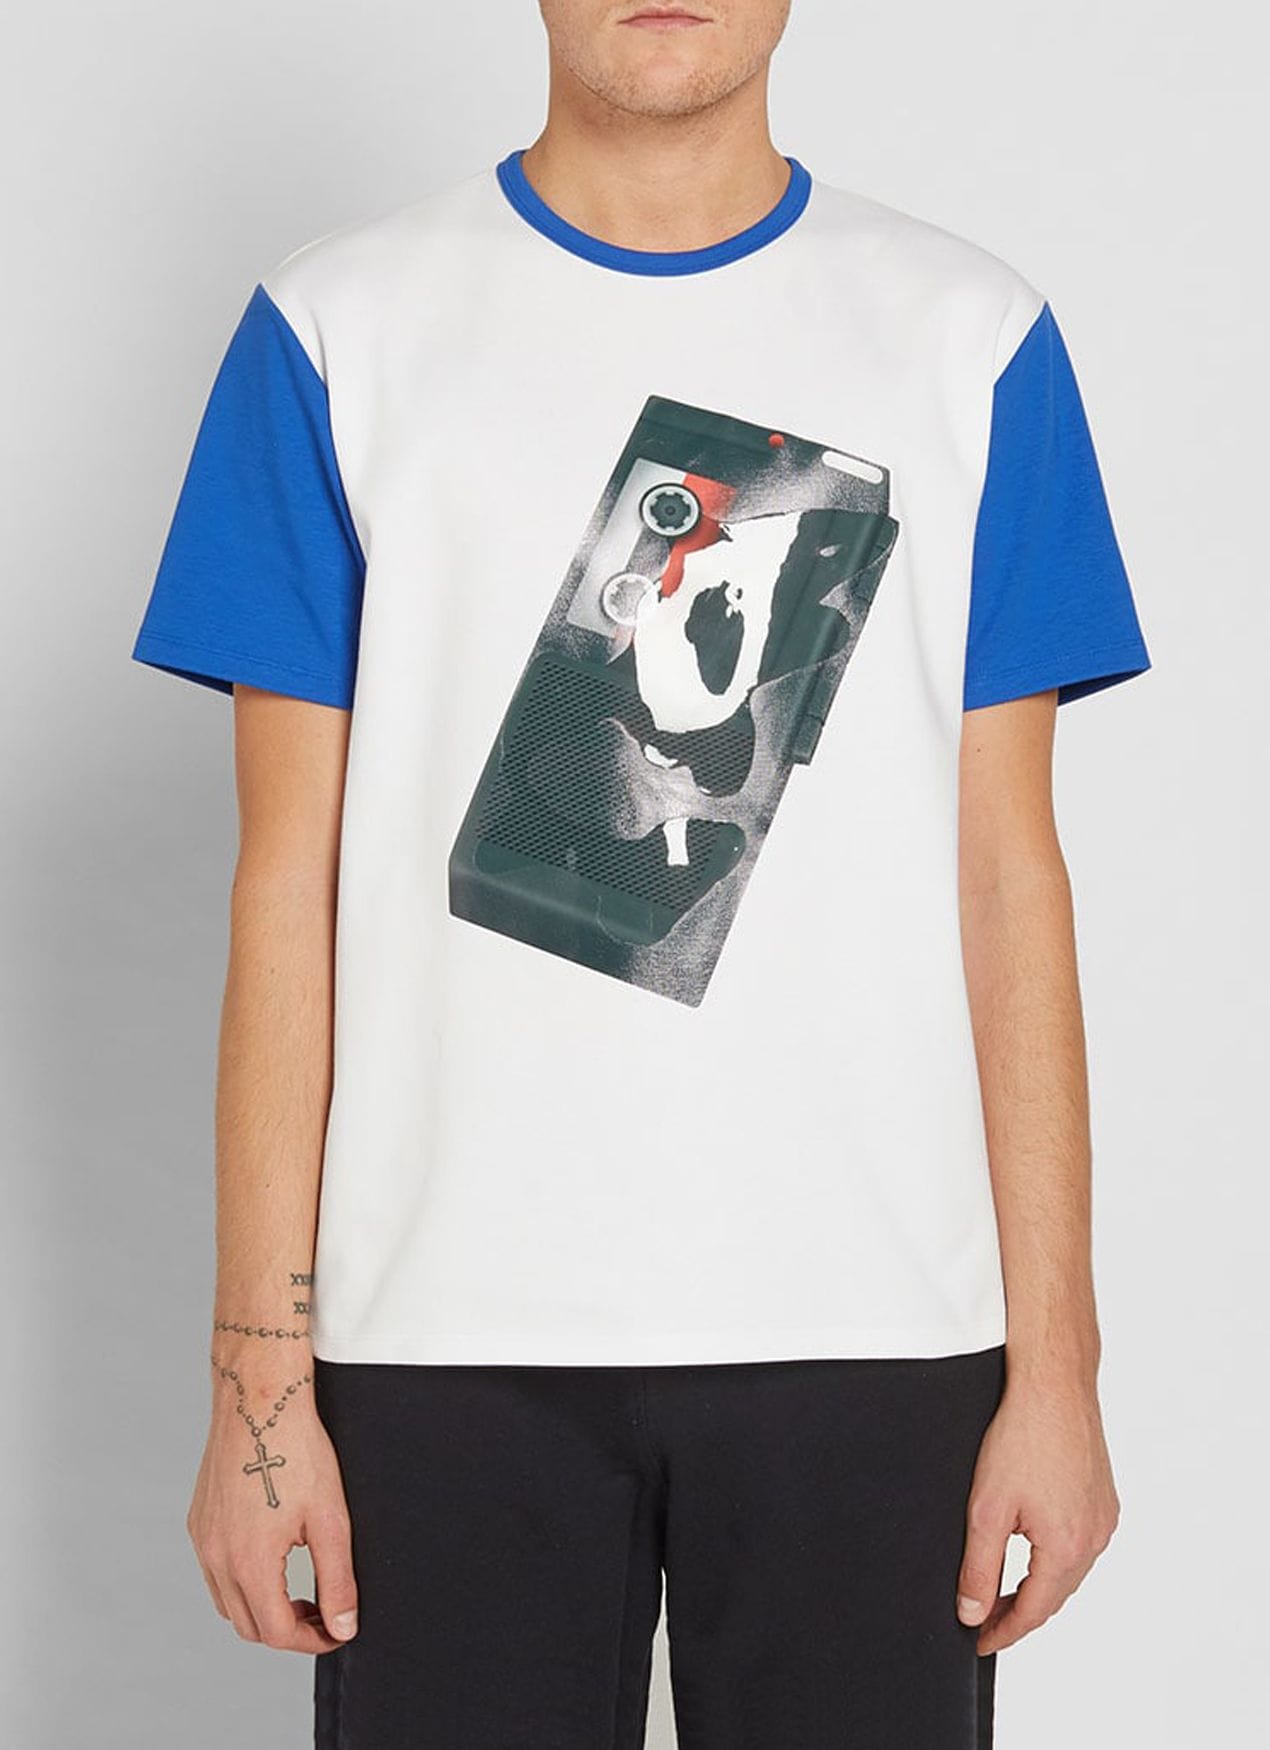 Contrast Collar with Radio Print T-Shirt